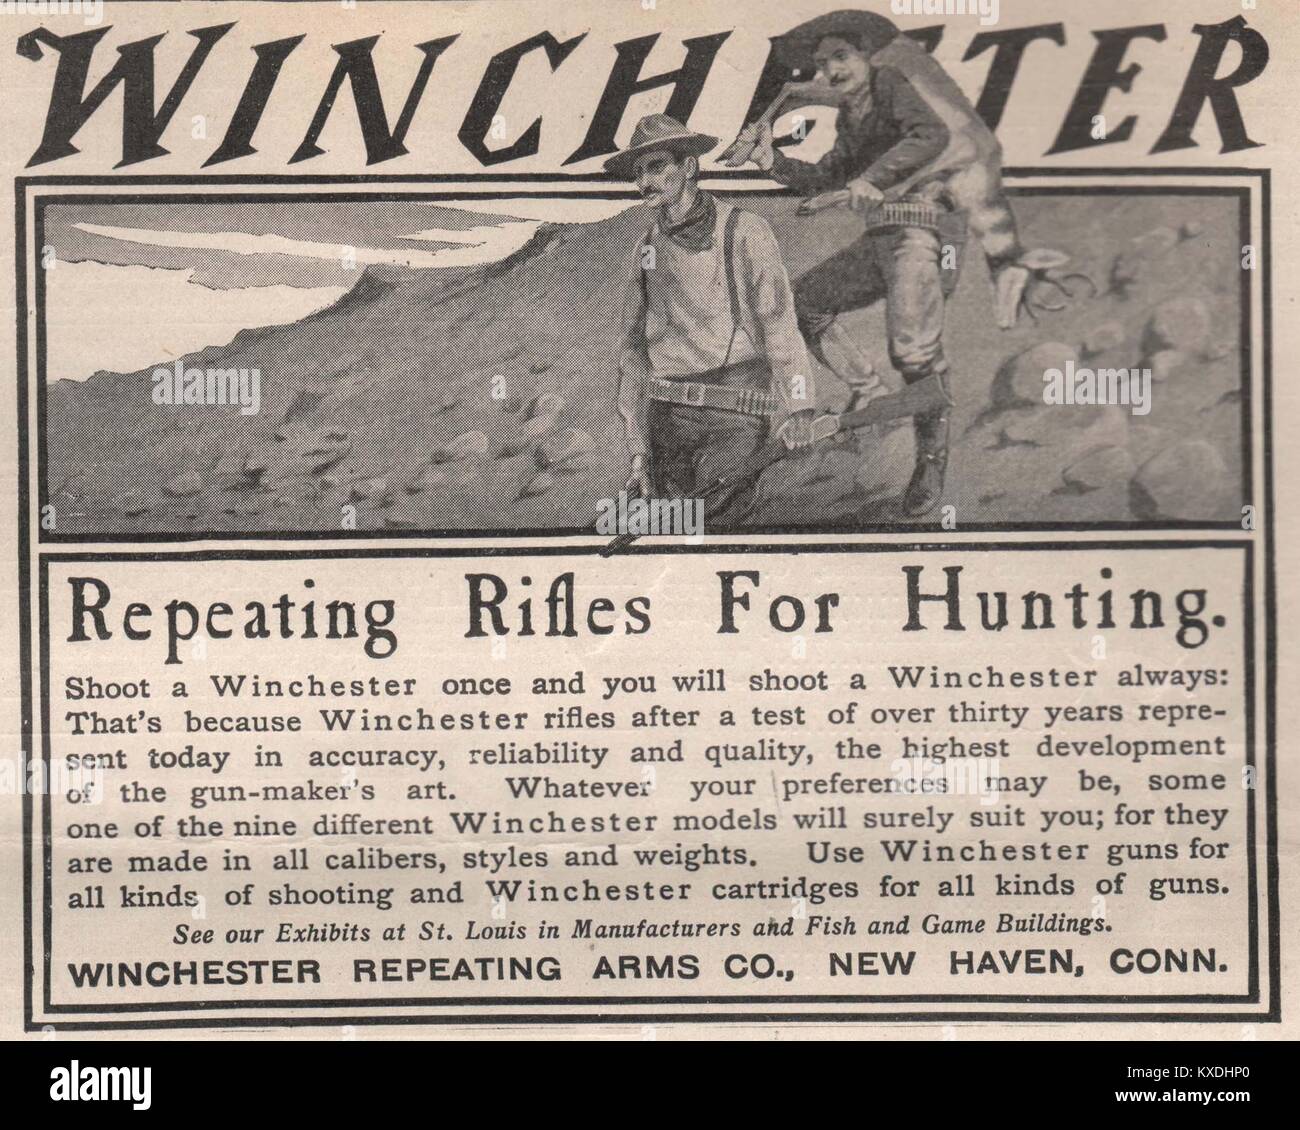 'Winchester' - Winchester wiederholen Arme Co., New Haven, Conn Stockfoto